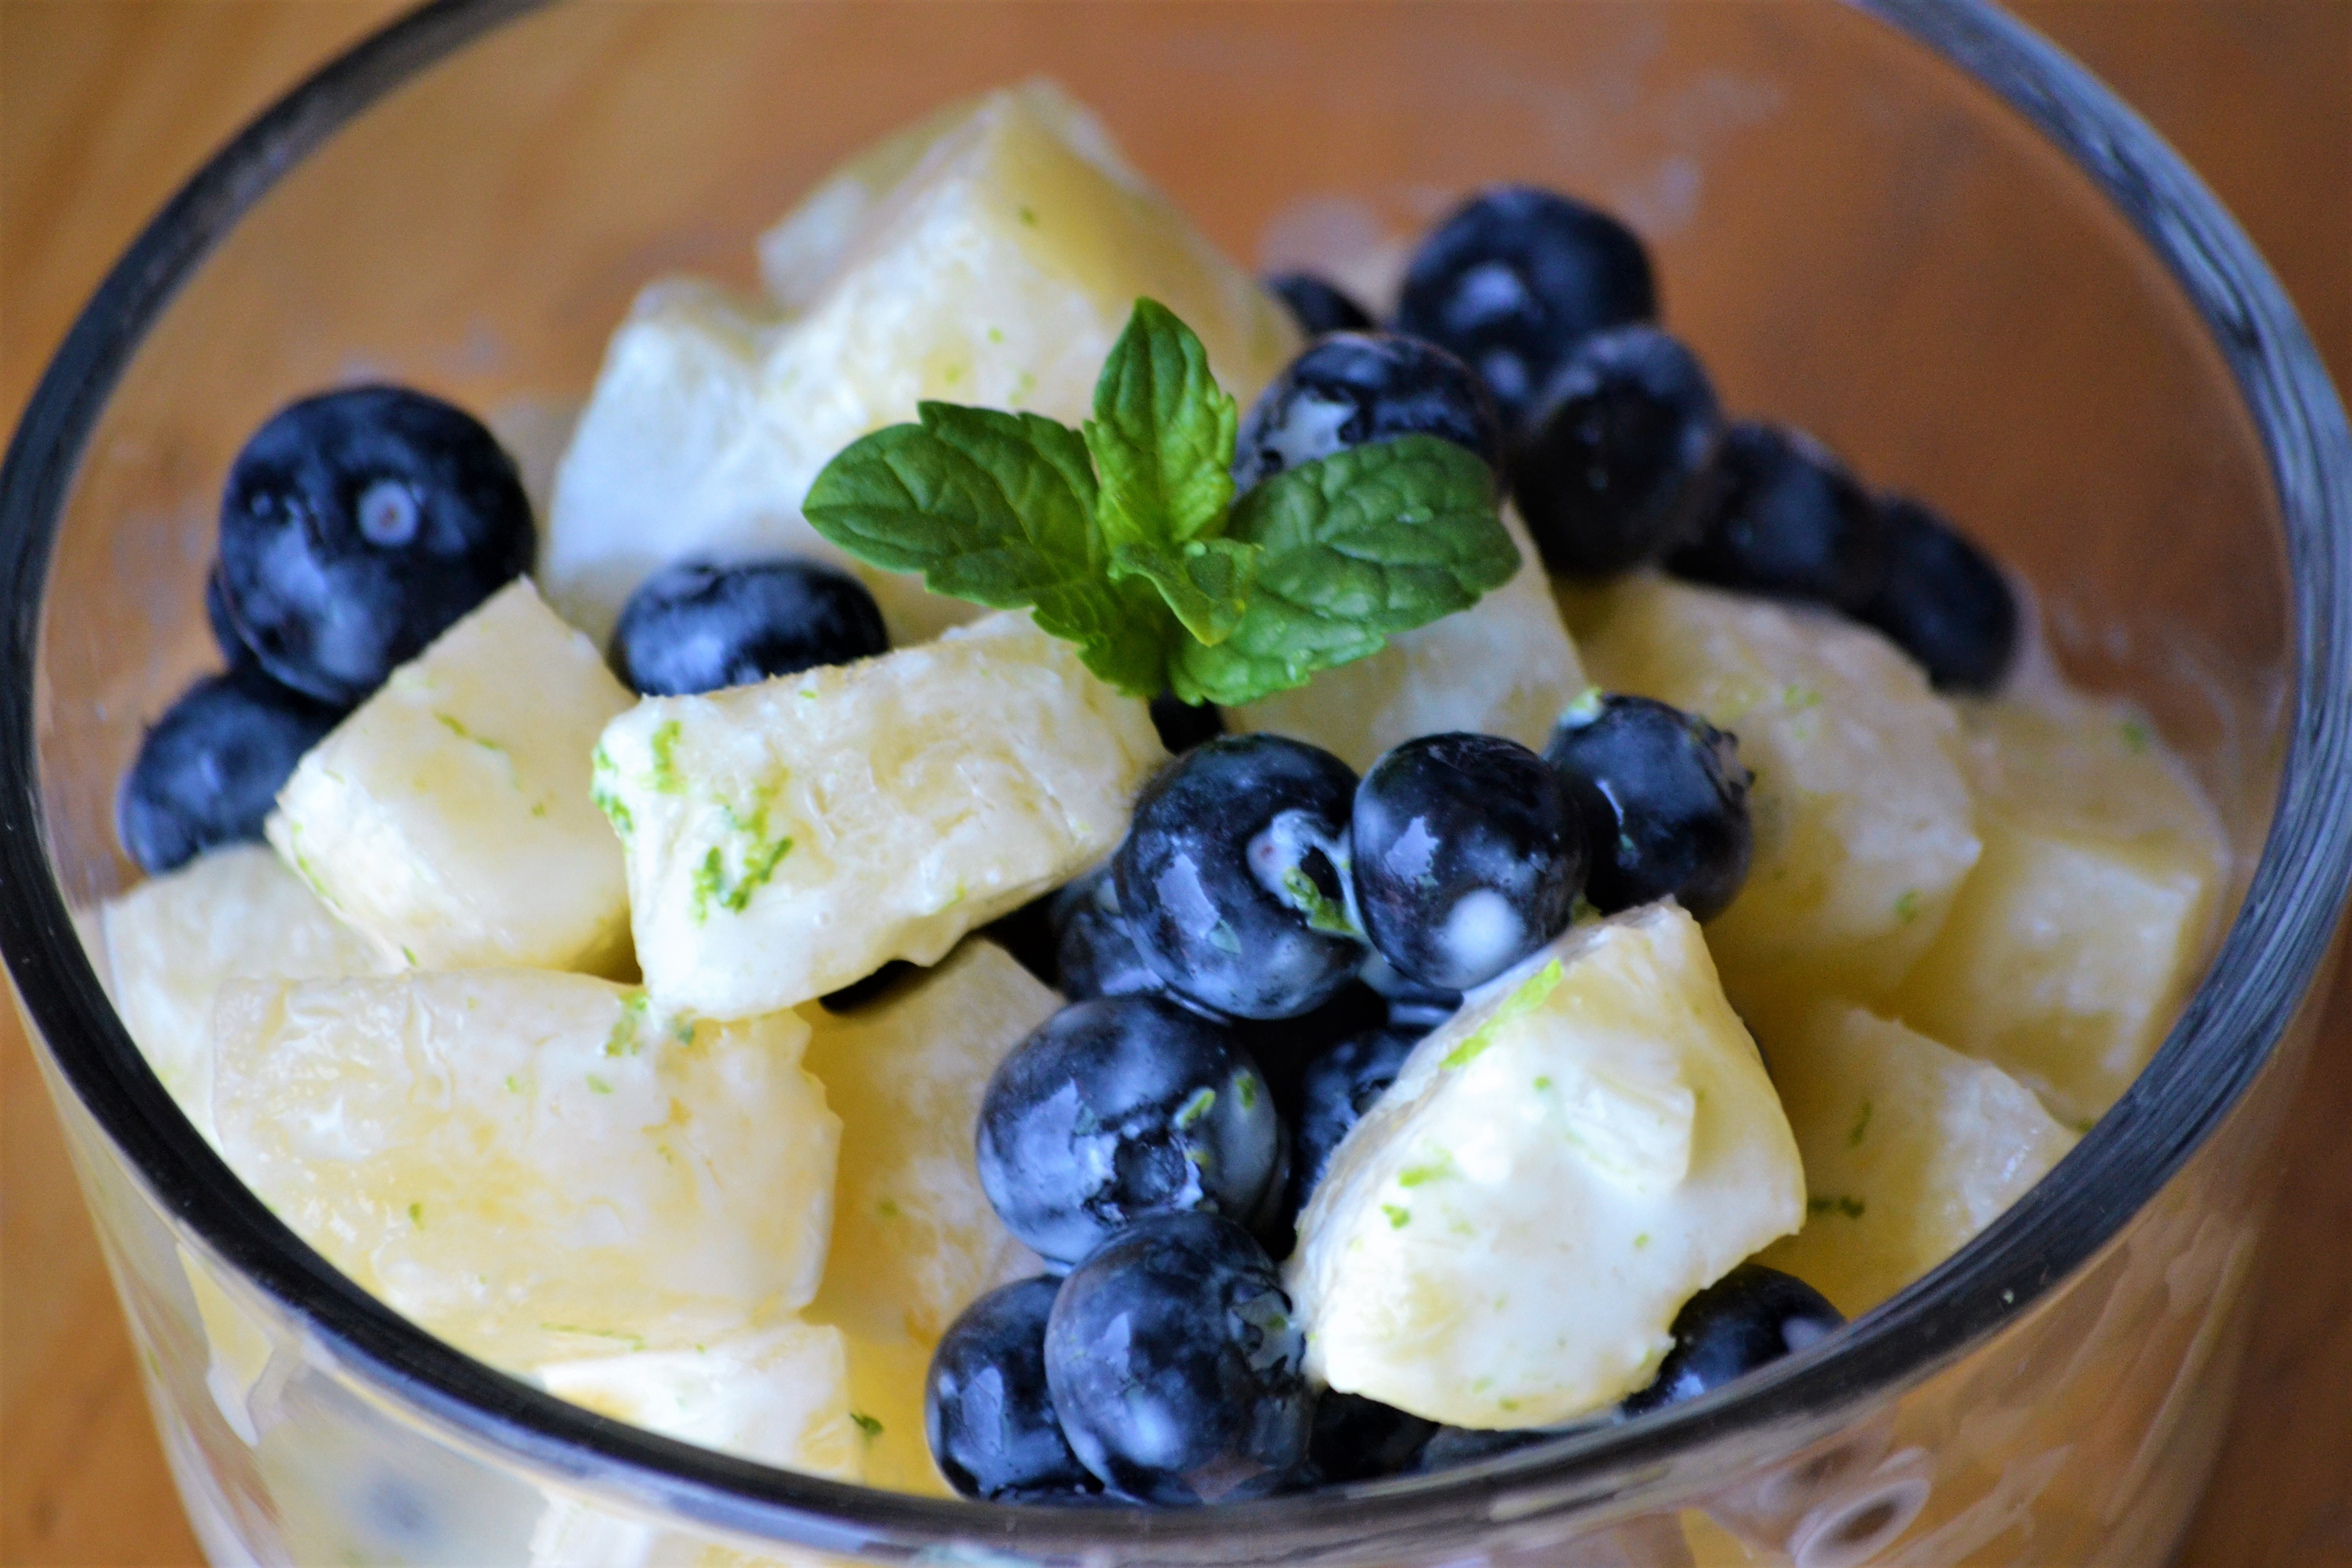 Blueberry-Pineapple Salad with Creamy Yogurt Dressing_image